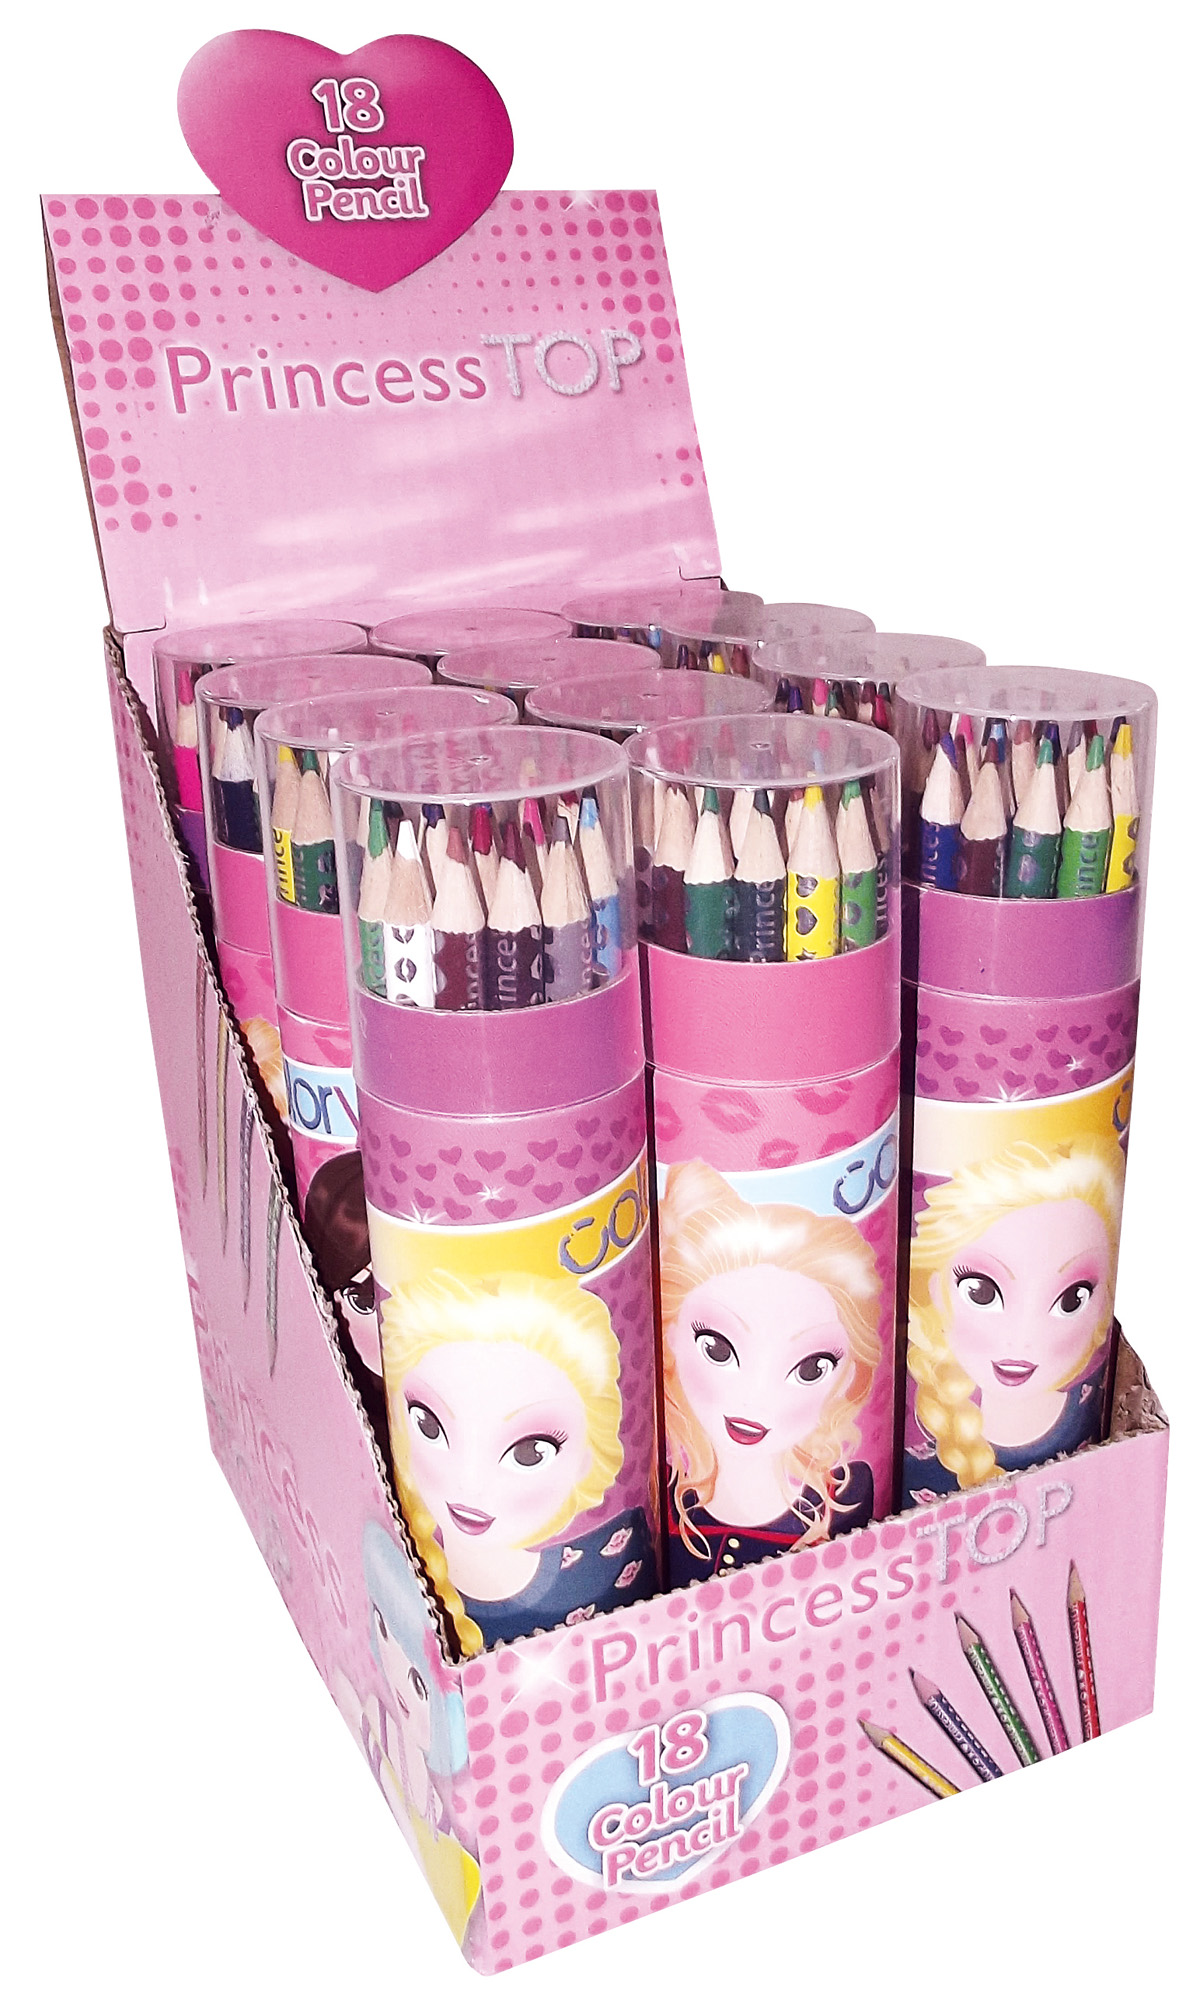 Princess Top - 18 Colour Pencils